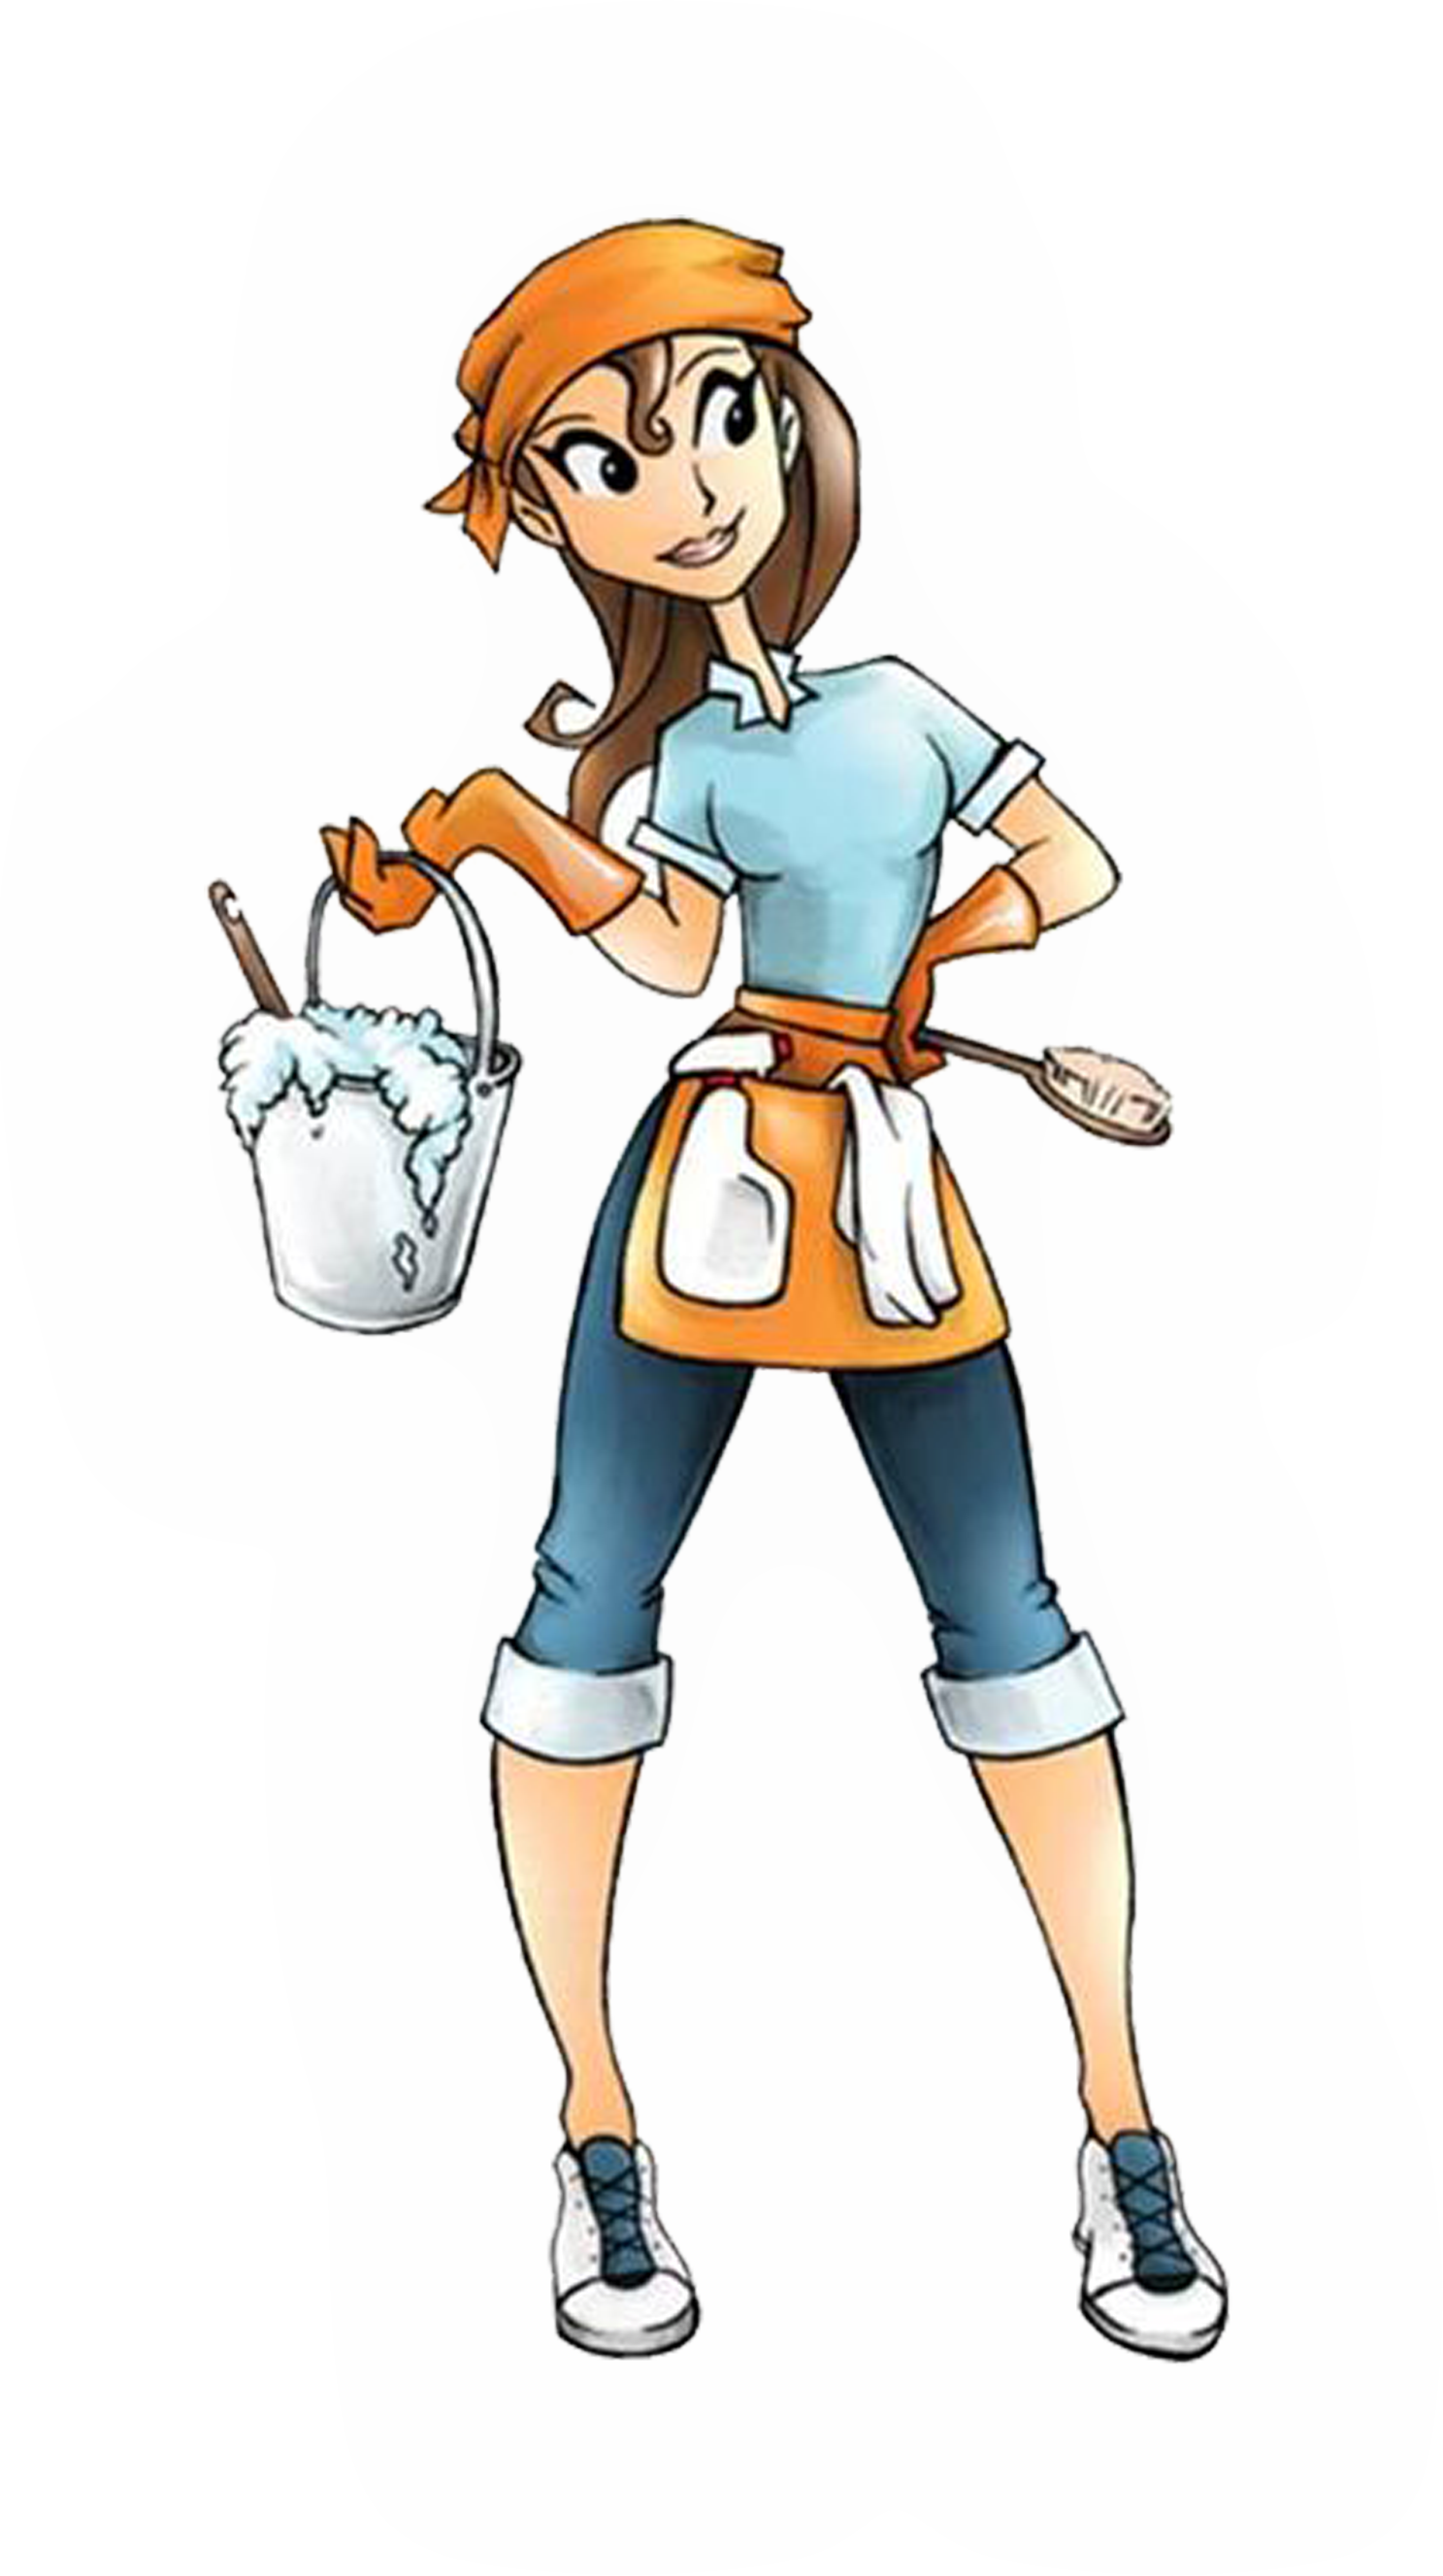 housekeeper cartoon character clip art